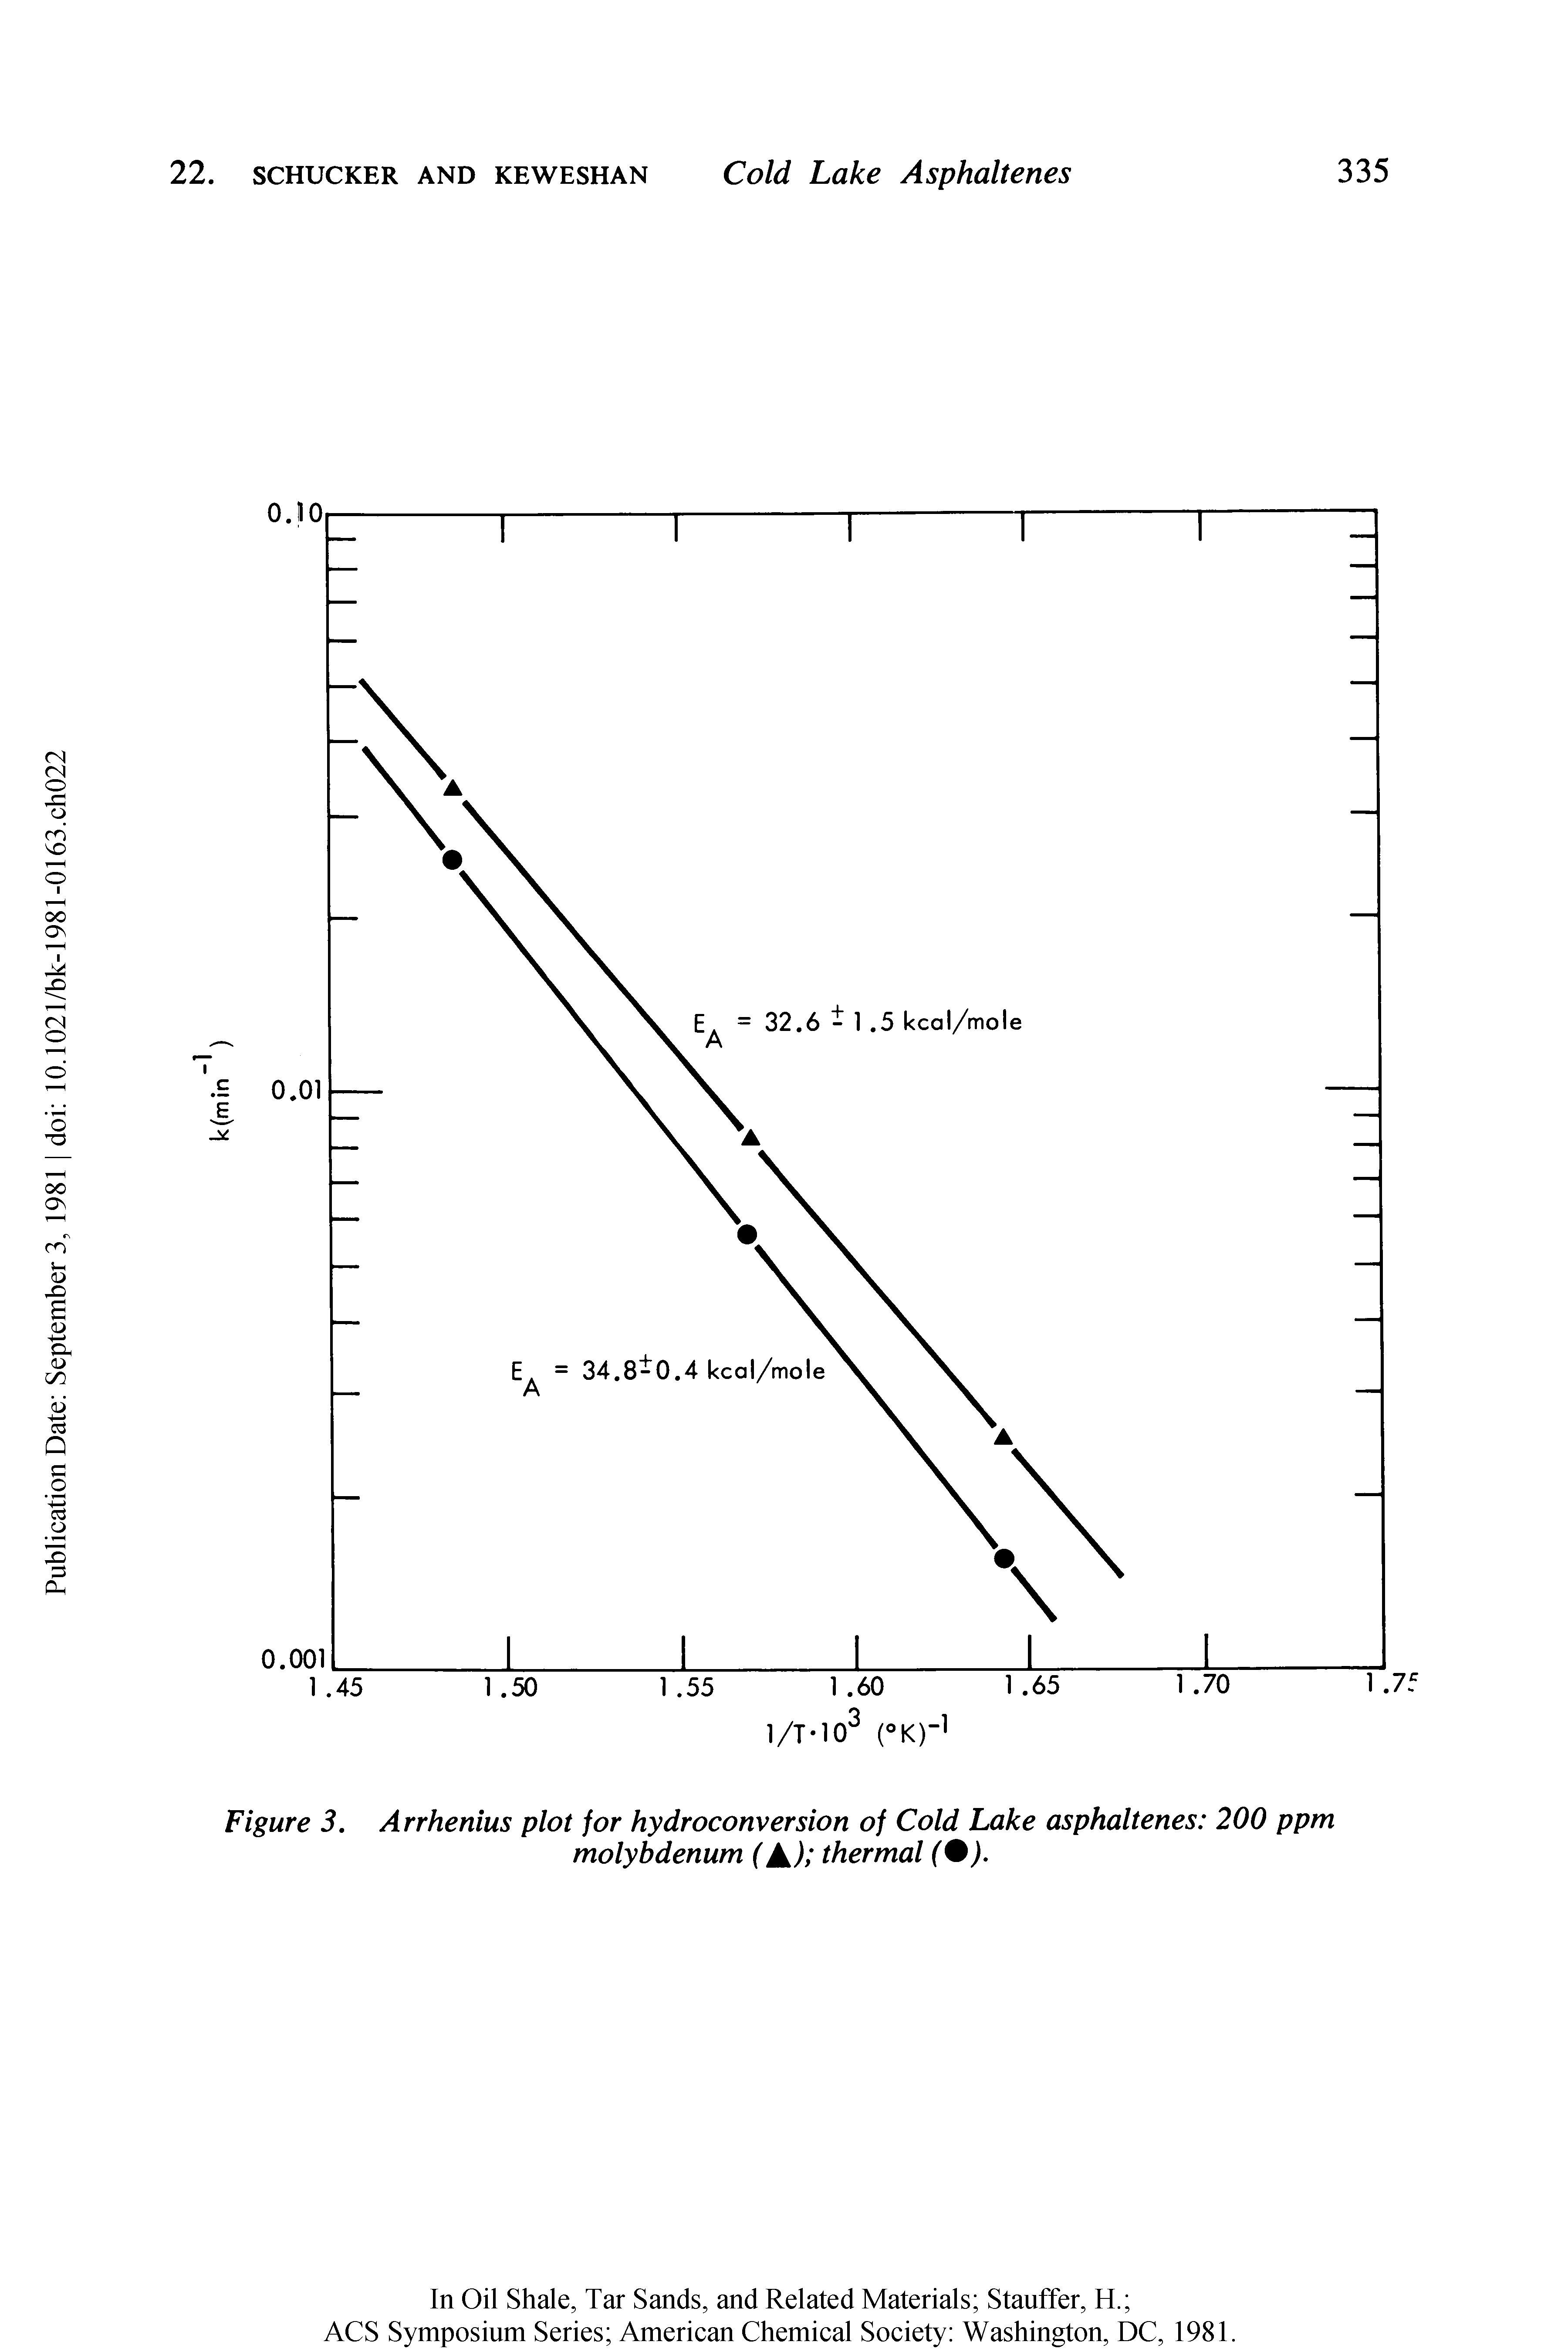 Figure 3. Arrhenius plot for hydroconversion of Cold Lake asphaltenes 200 ppm molybdenum (A) thermal (0).